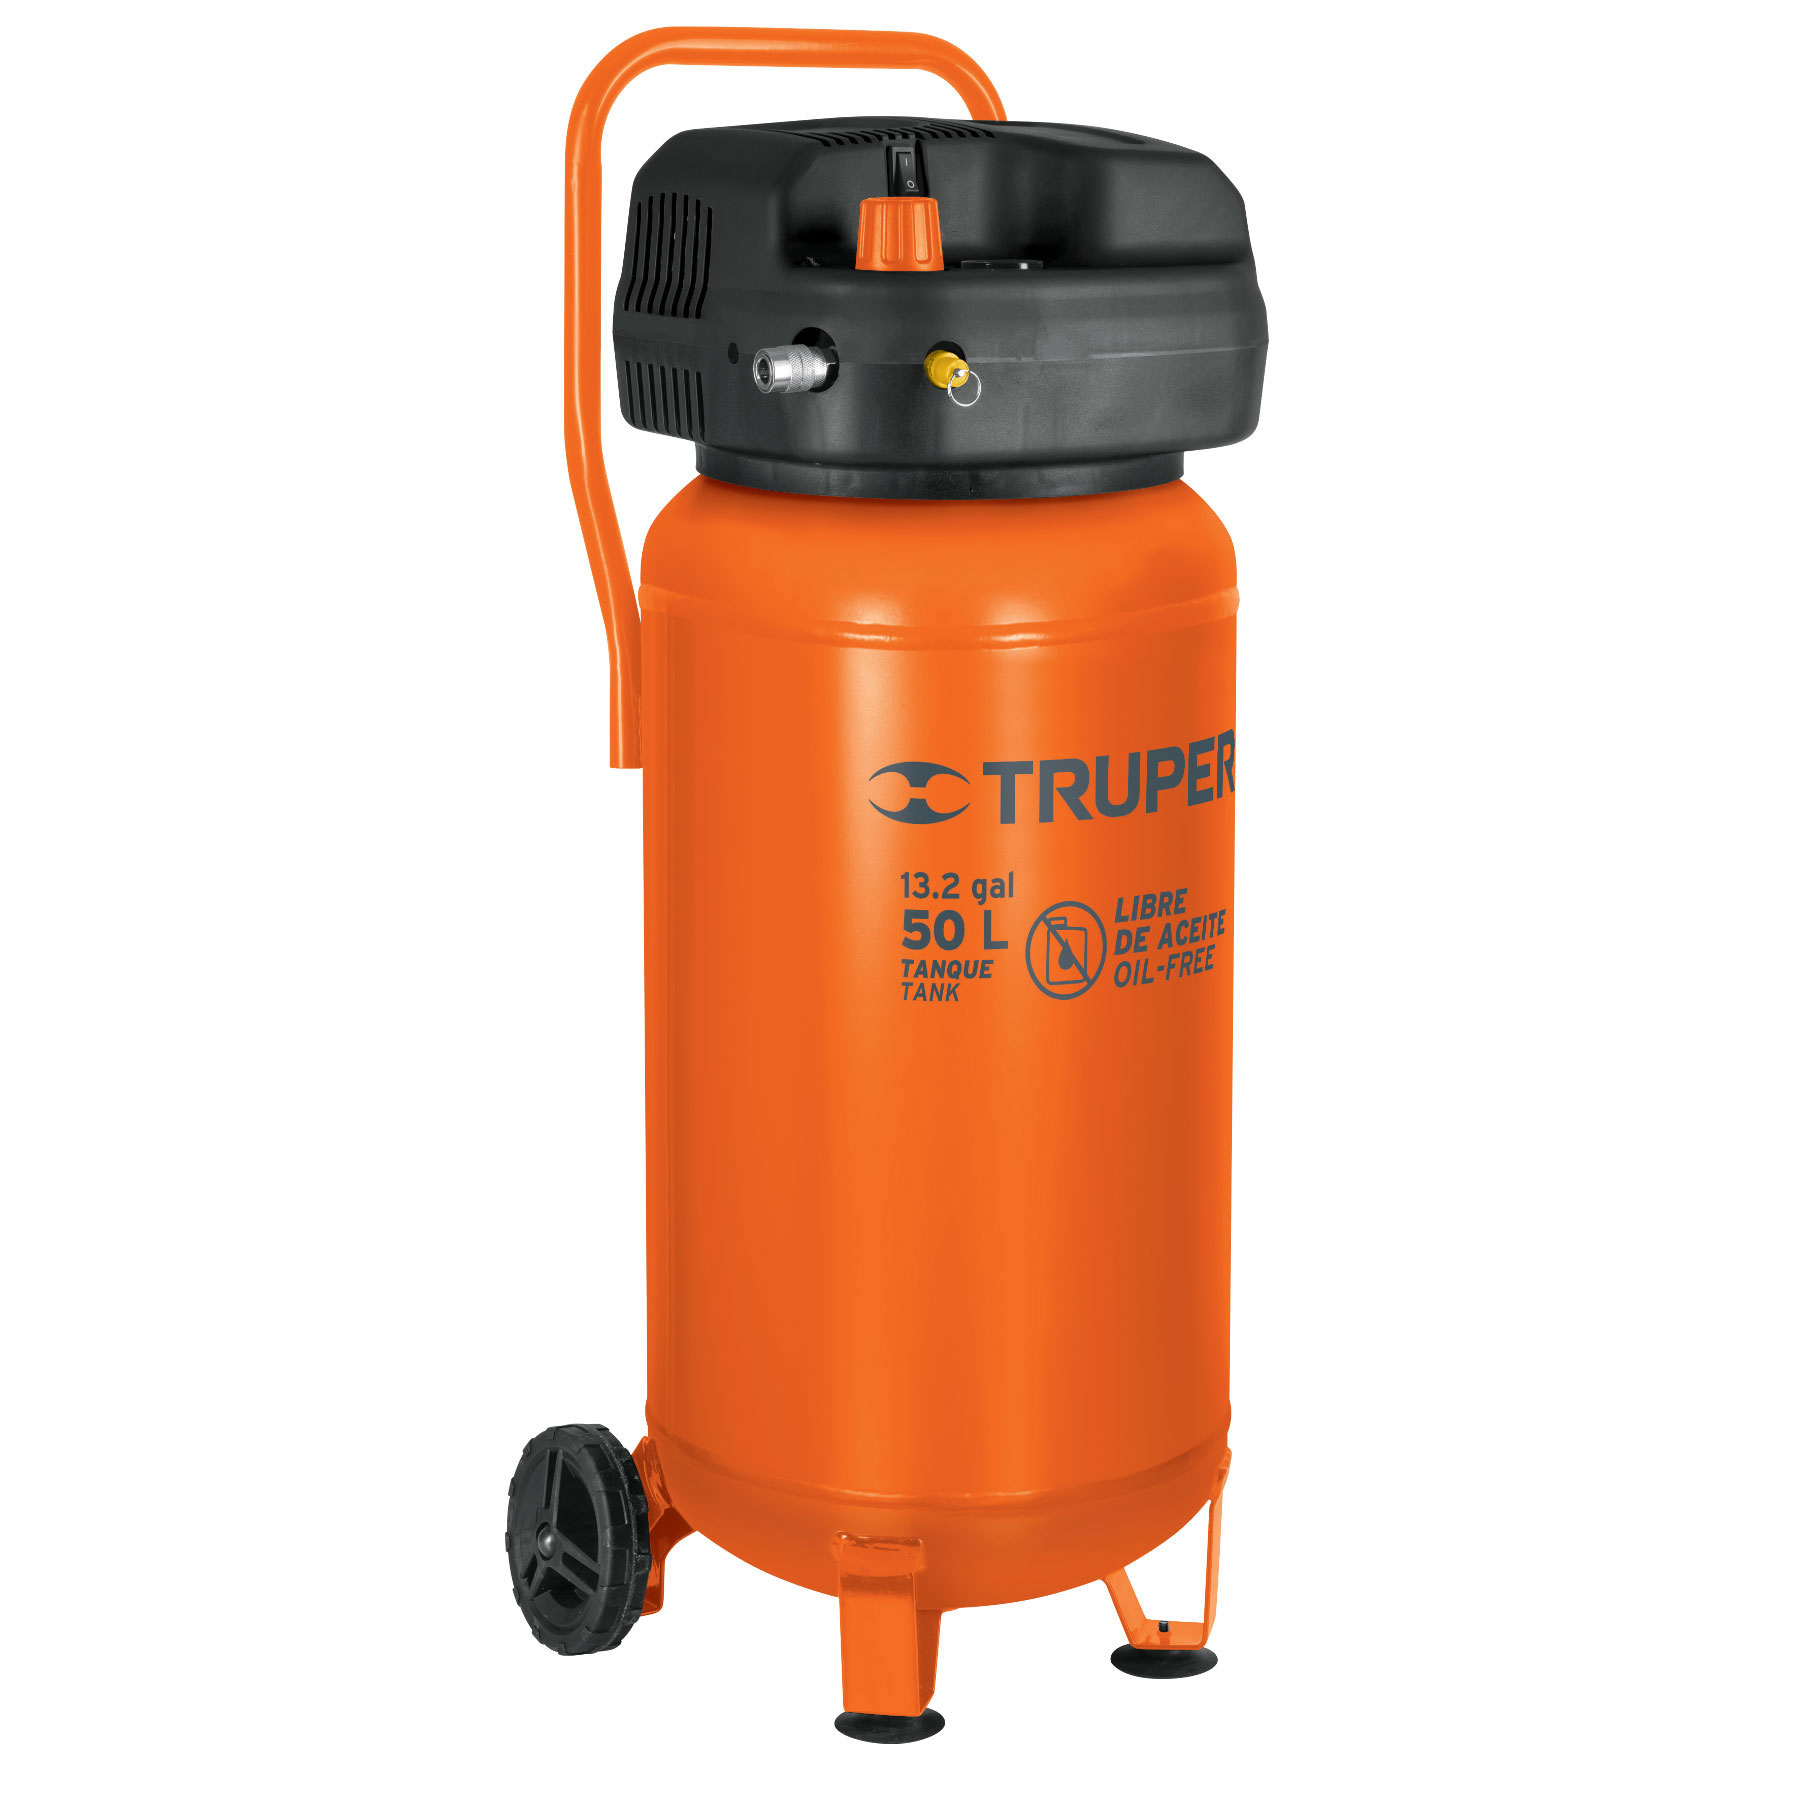 Compresor de aire 50 litros, 2 CV - Precio: 330,04 € - Megataller